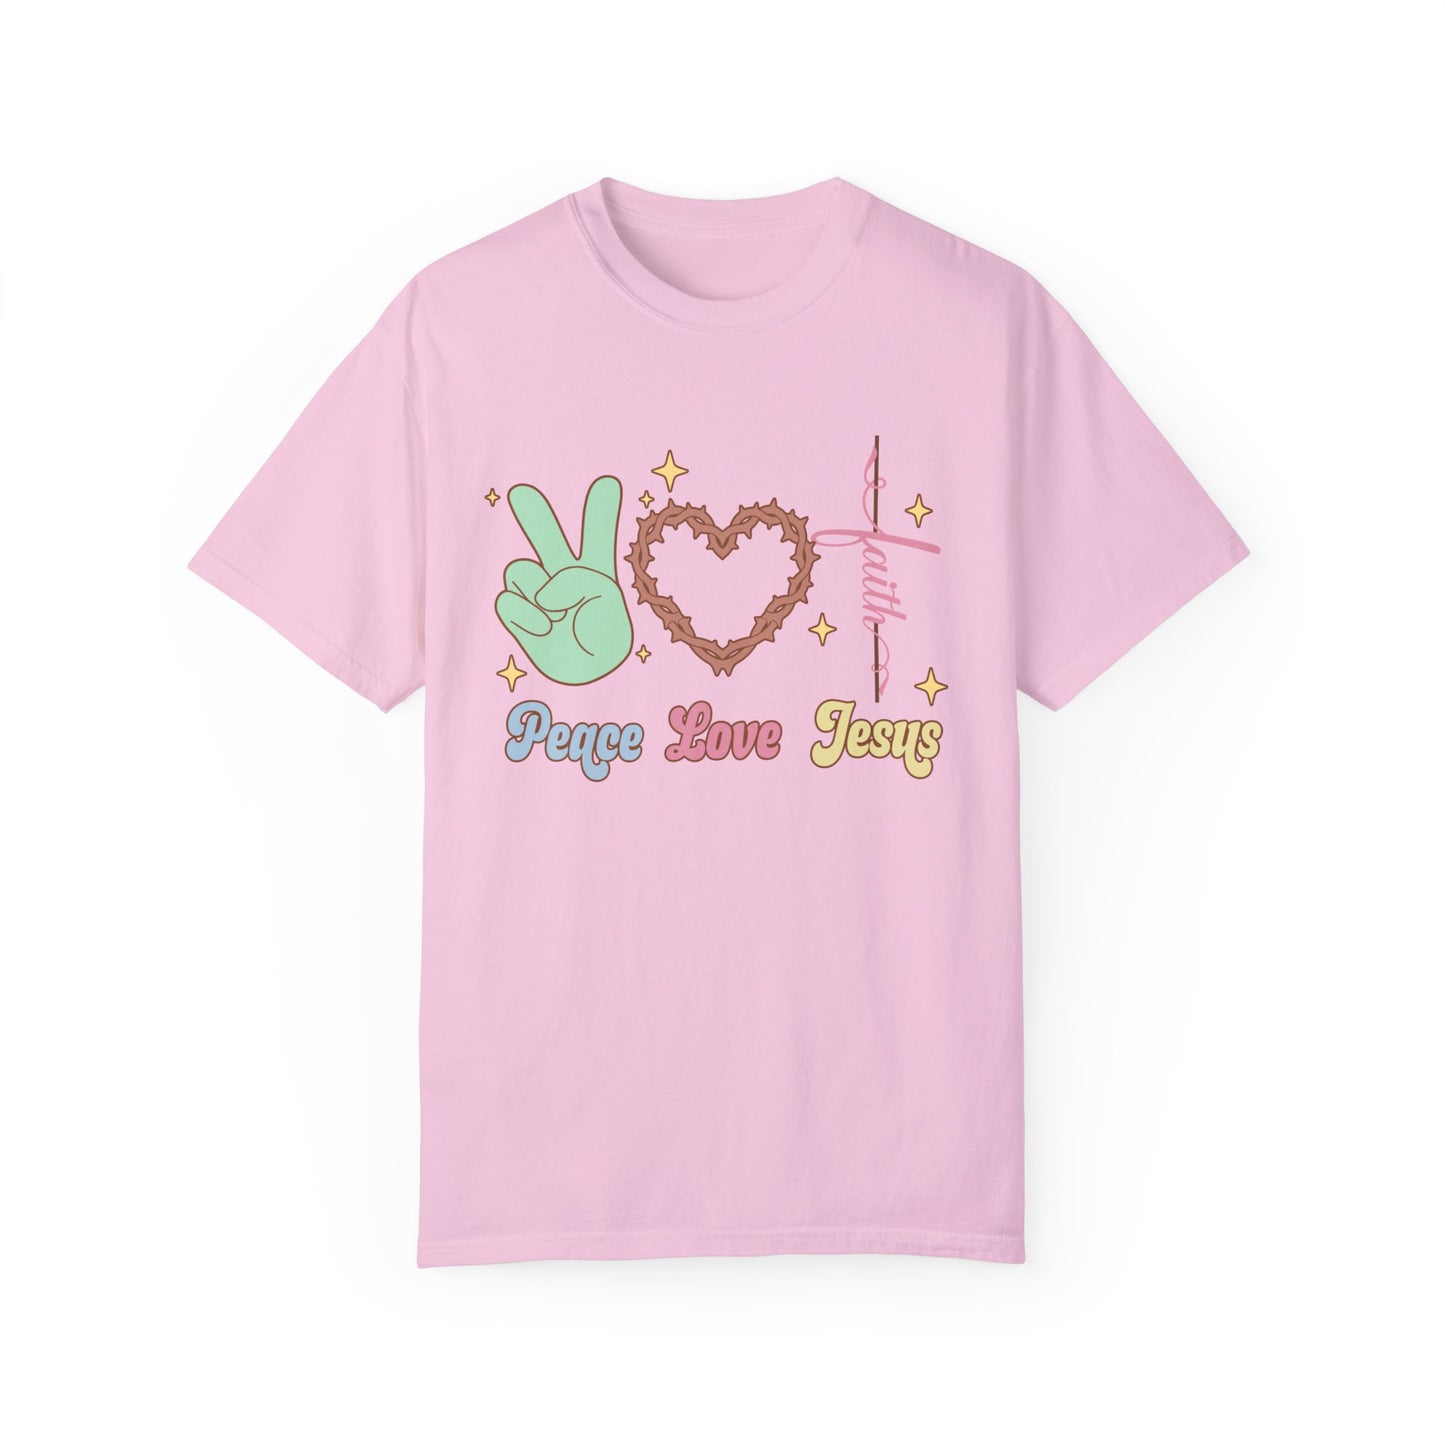 Peace Love Jesus Unisex Garment-Dyed T-shirt